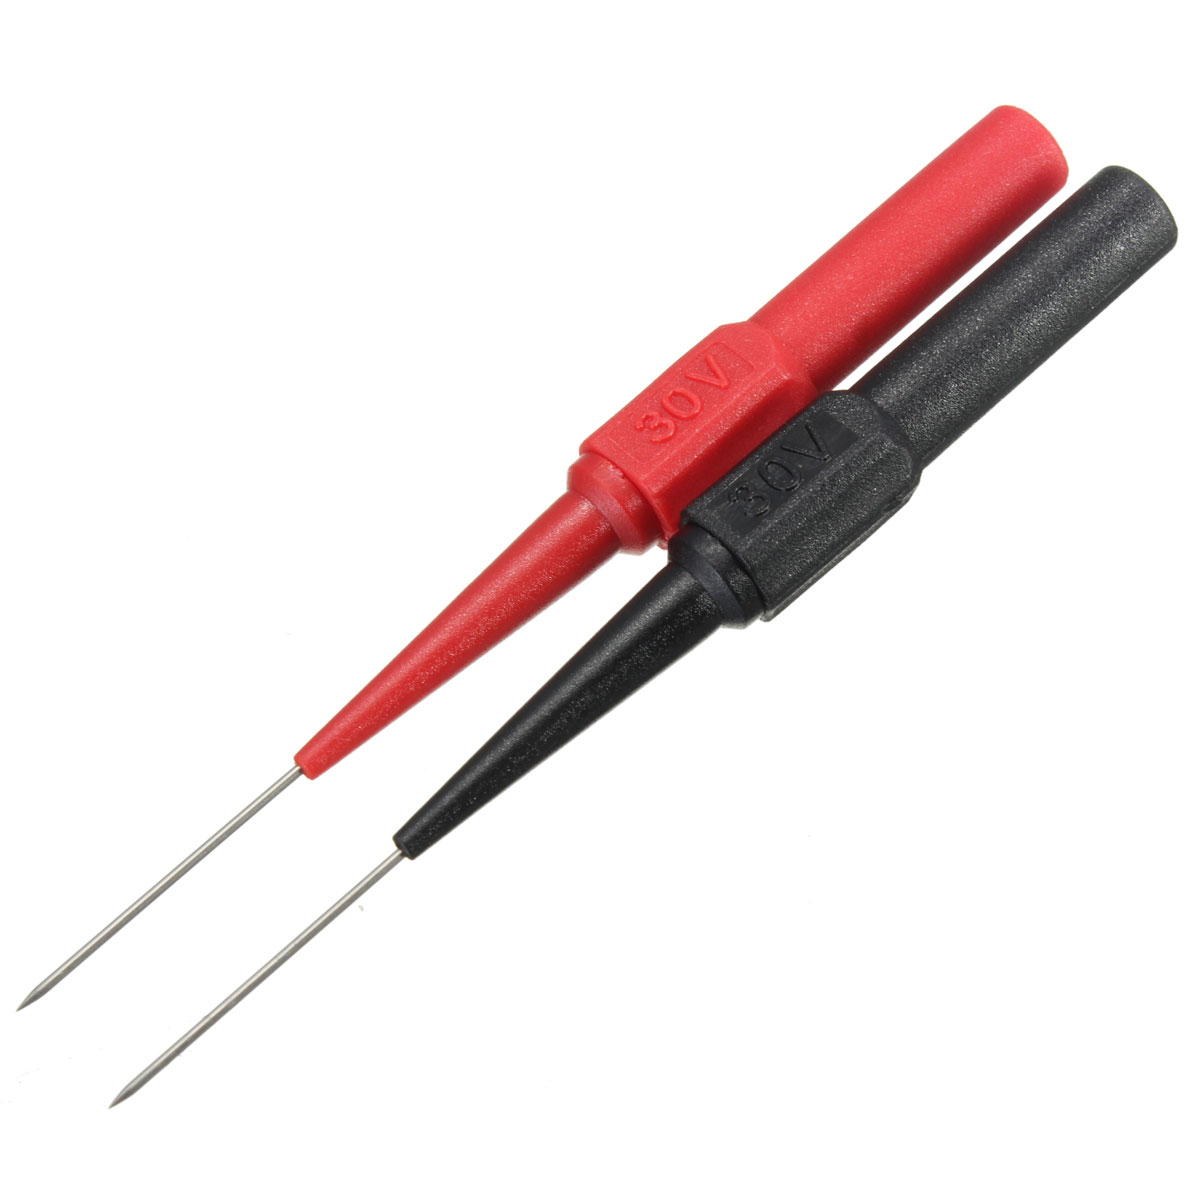 10pcs-DANIU-Insulation-Piercing-Needle-Non-destructive-Multimeter-Test-Probe-RedBlack-1402568-2